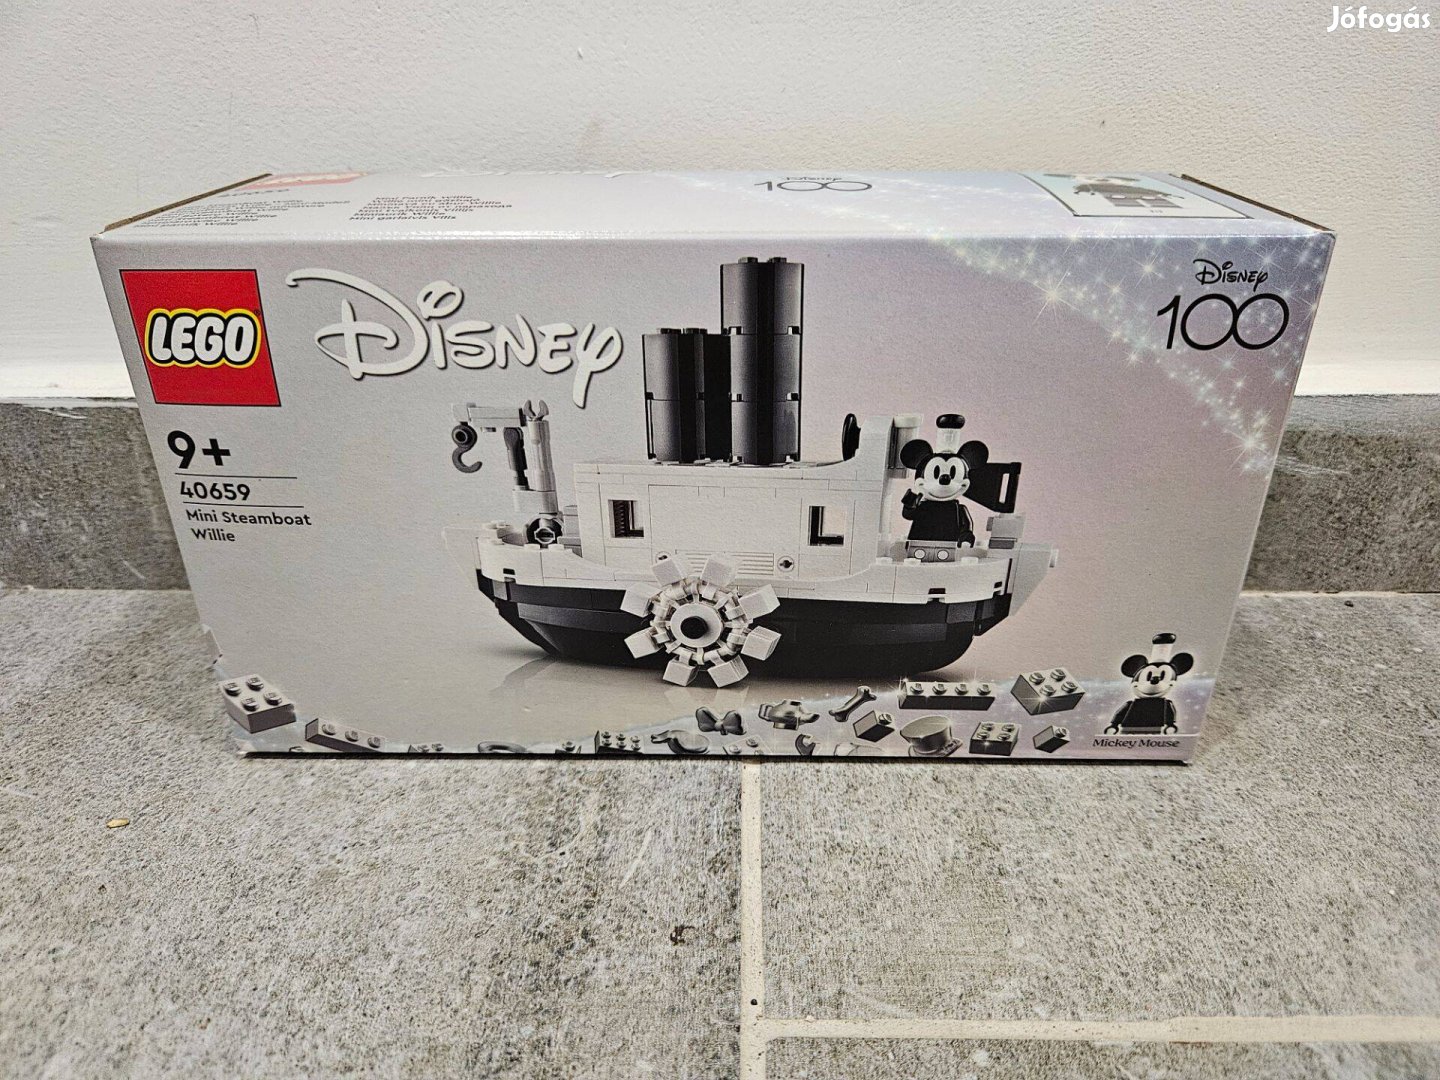 LEGO Disney - Willie mini gőzhajó 40659 bontatlan, új